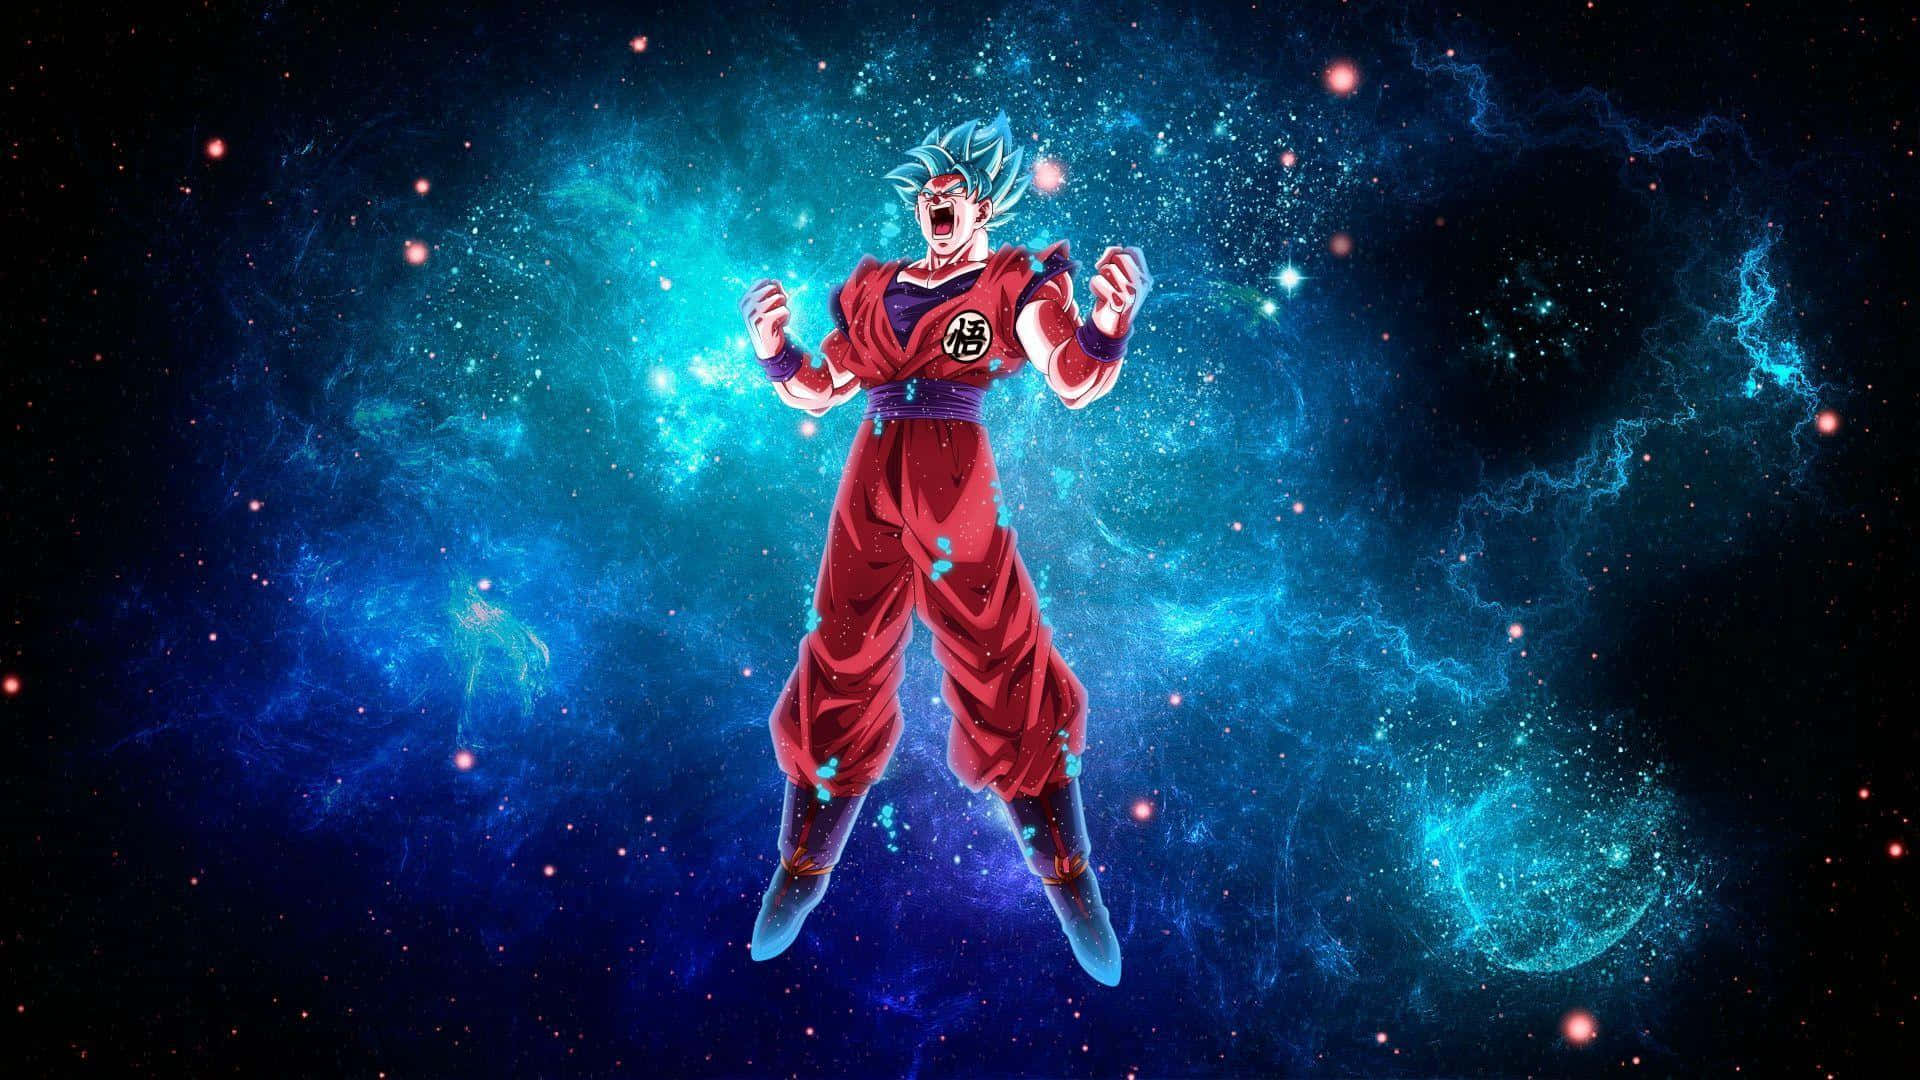 Goku,legendärer Held Von Dragon Ball